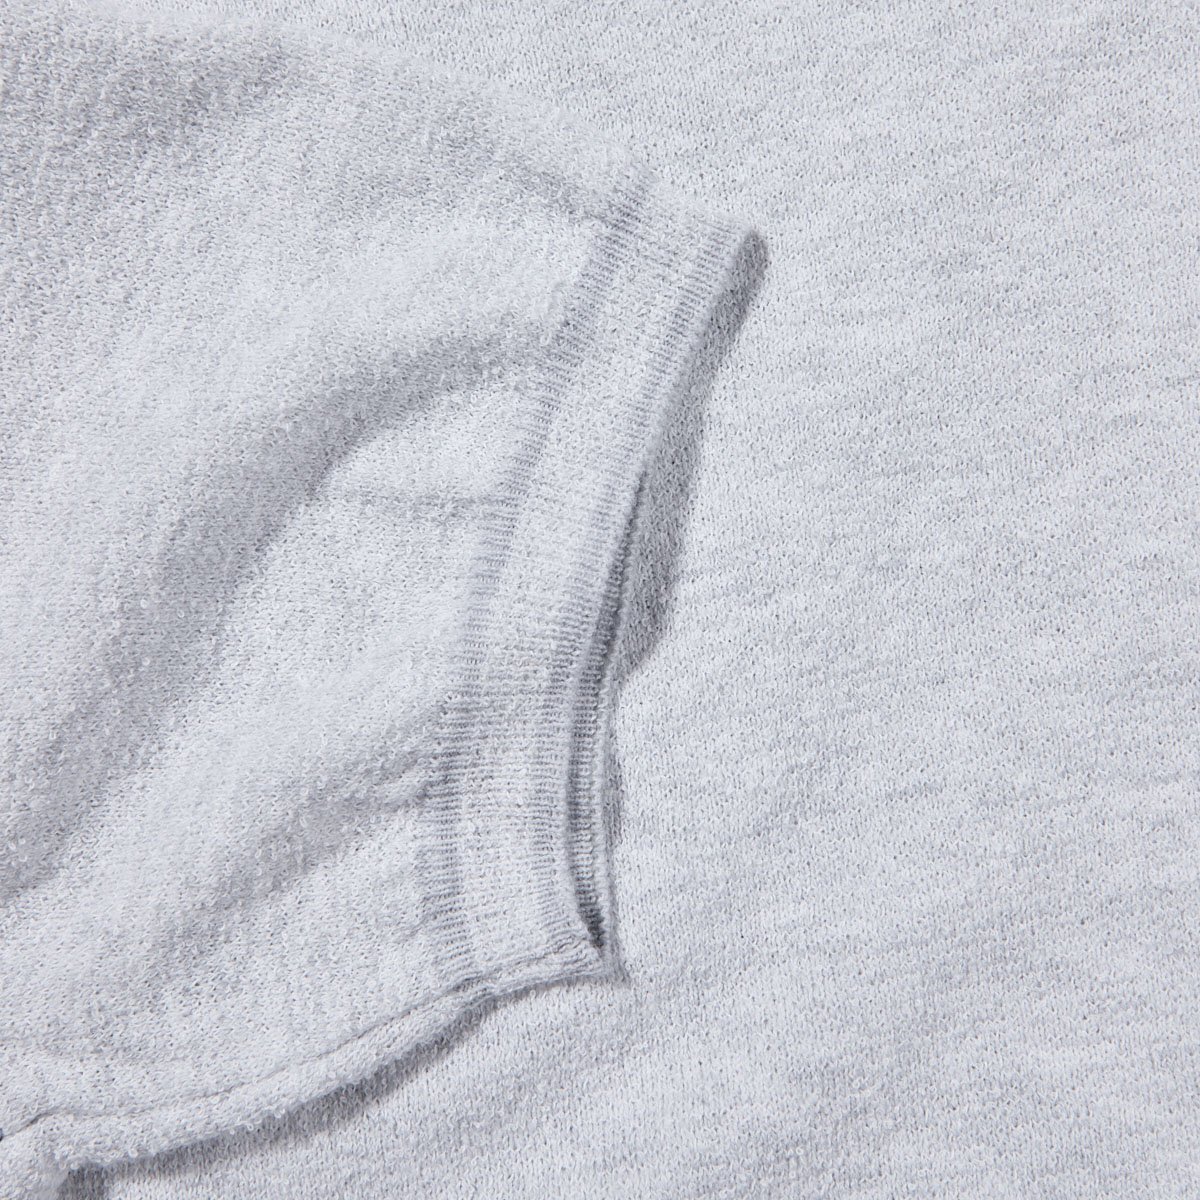 cotton t shirt texture